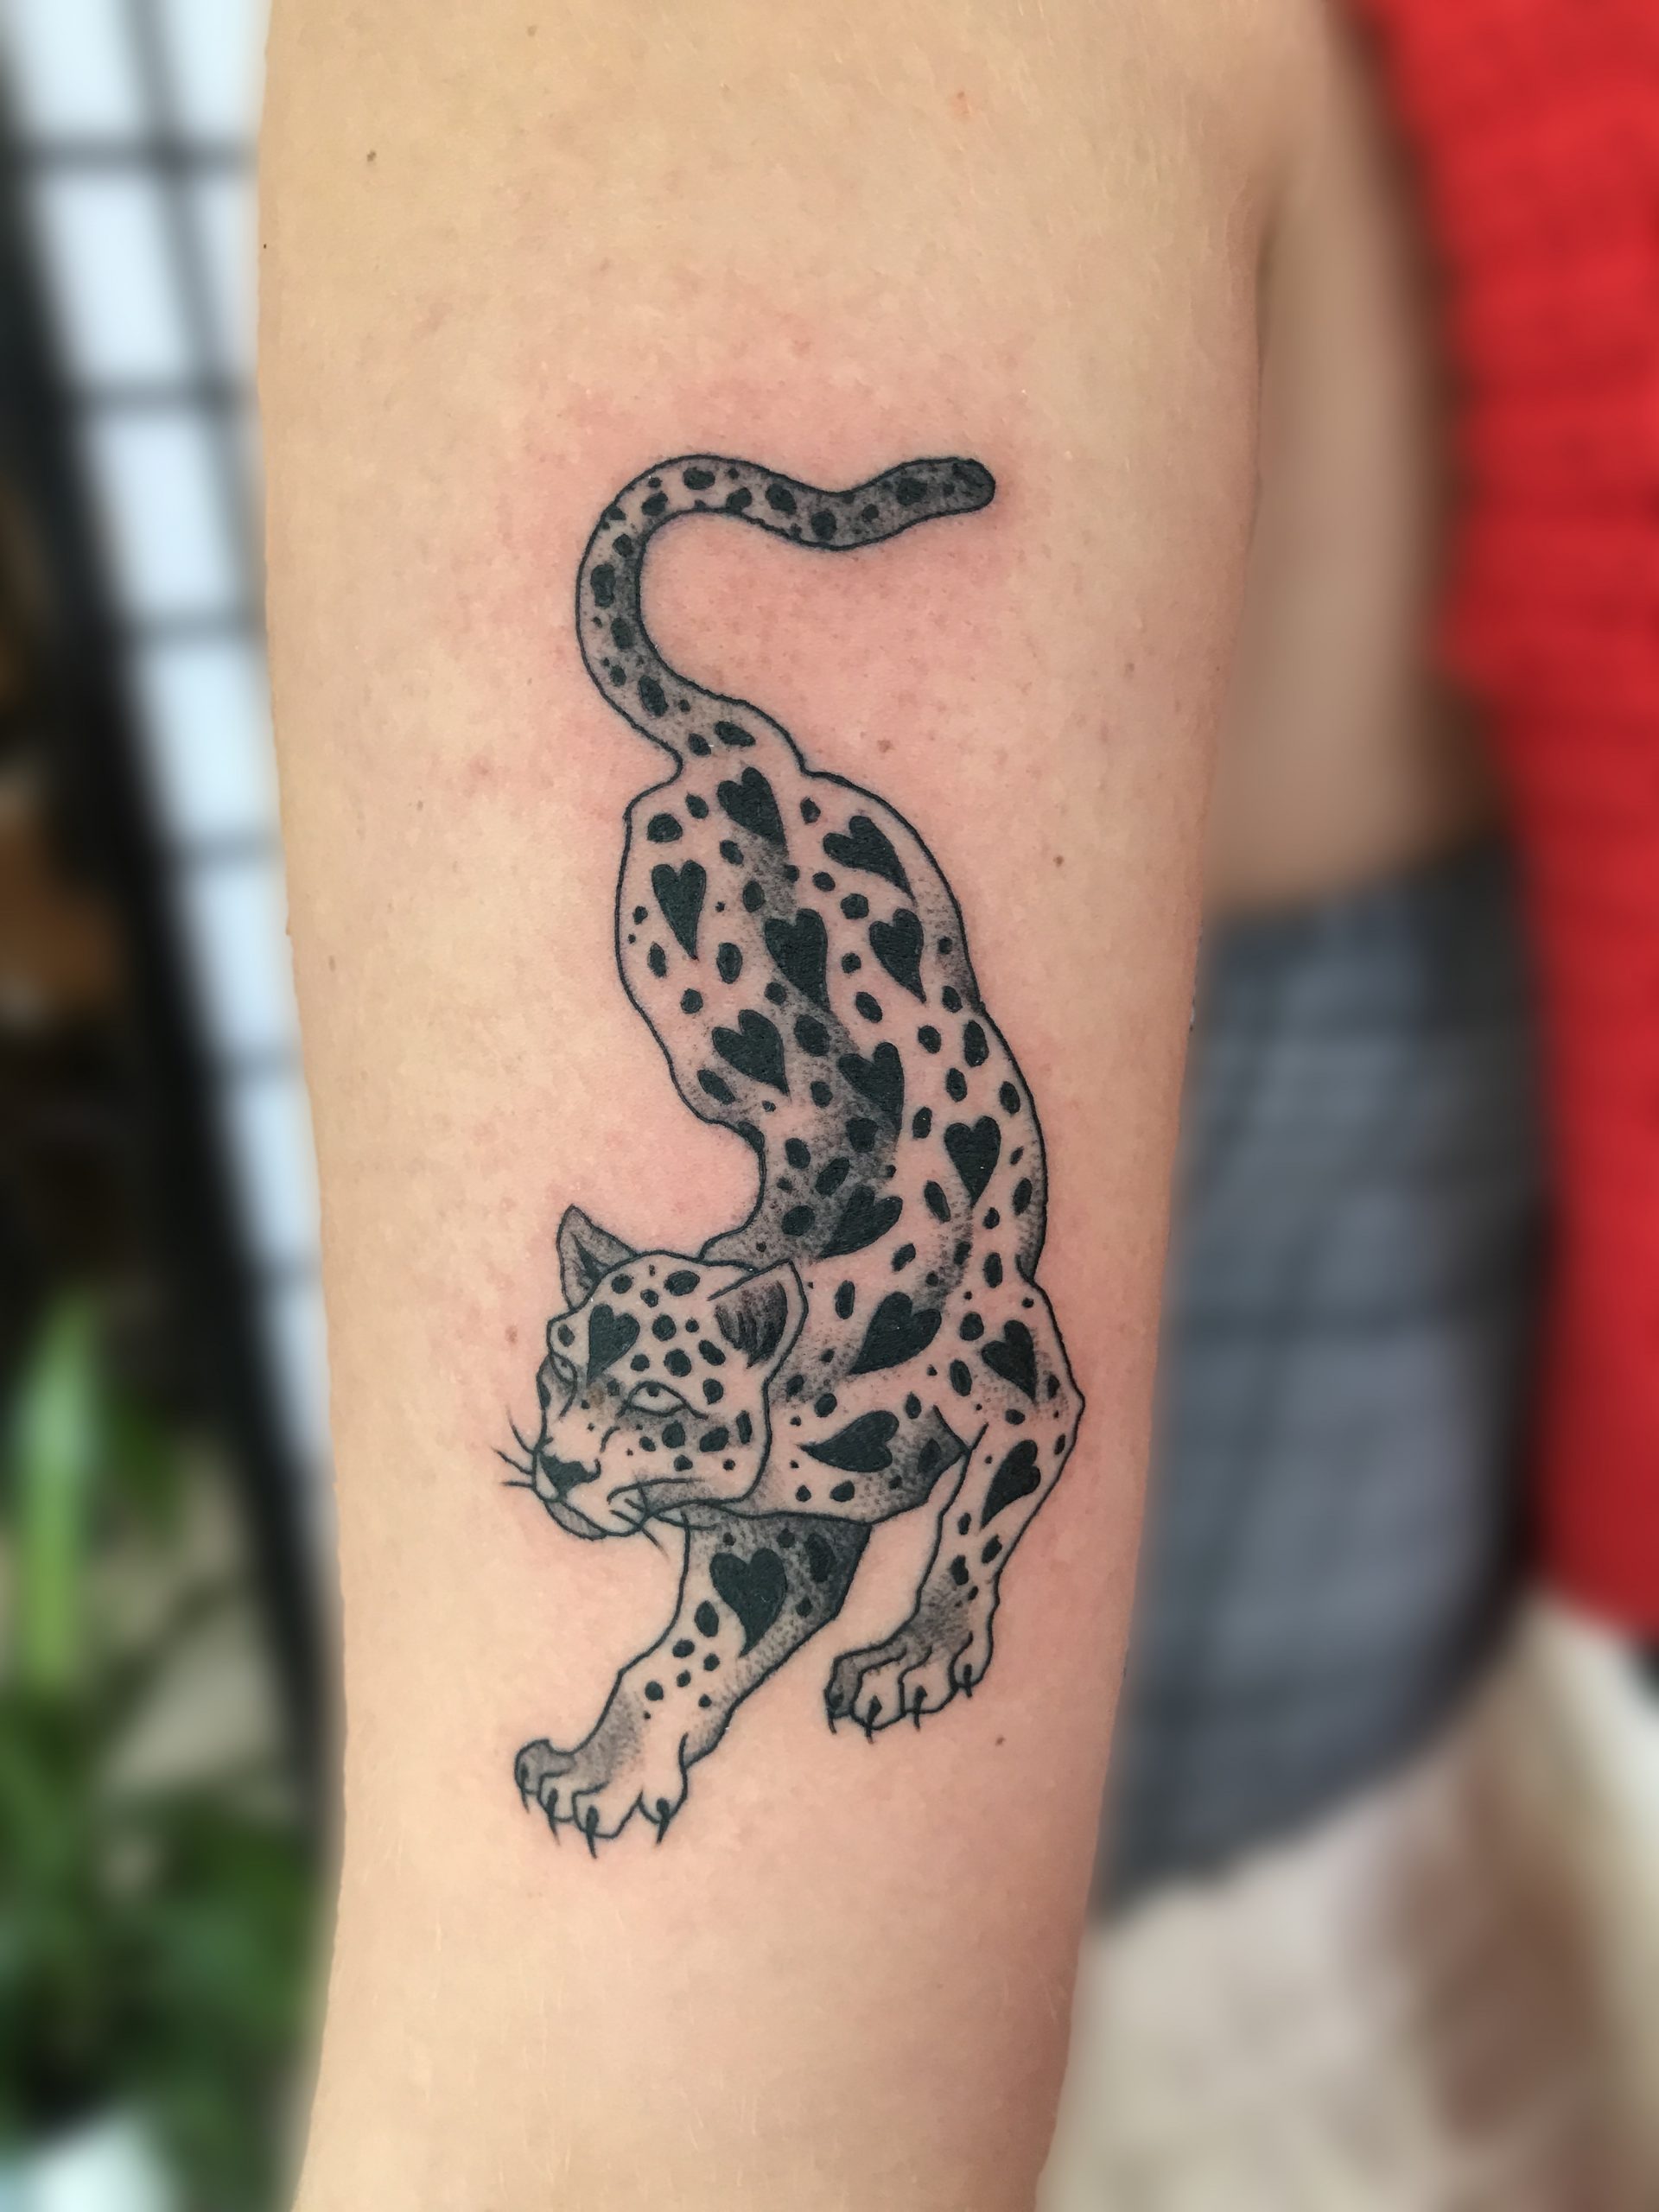 First tattoo Classic cheetah pose  Brendan Devine Modern Addiction  Tattoos Guelph Ontario  rtattoos